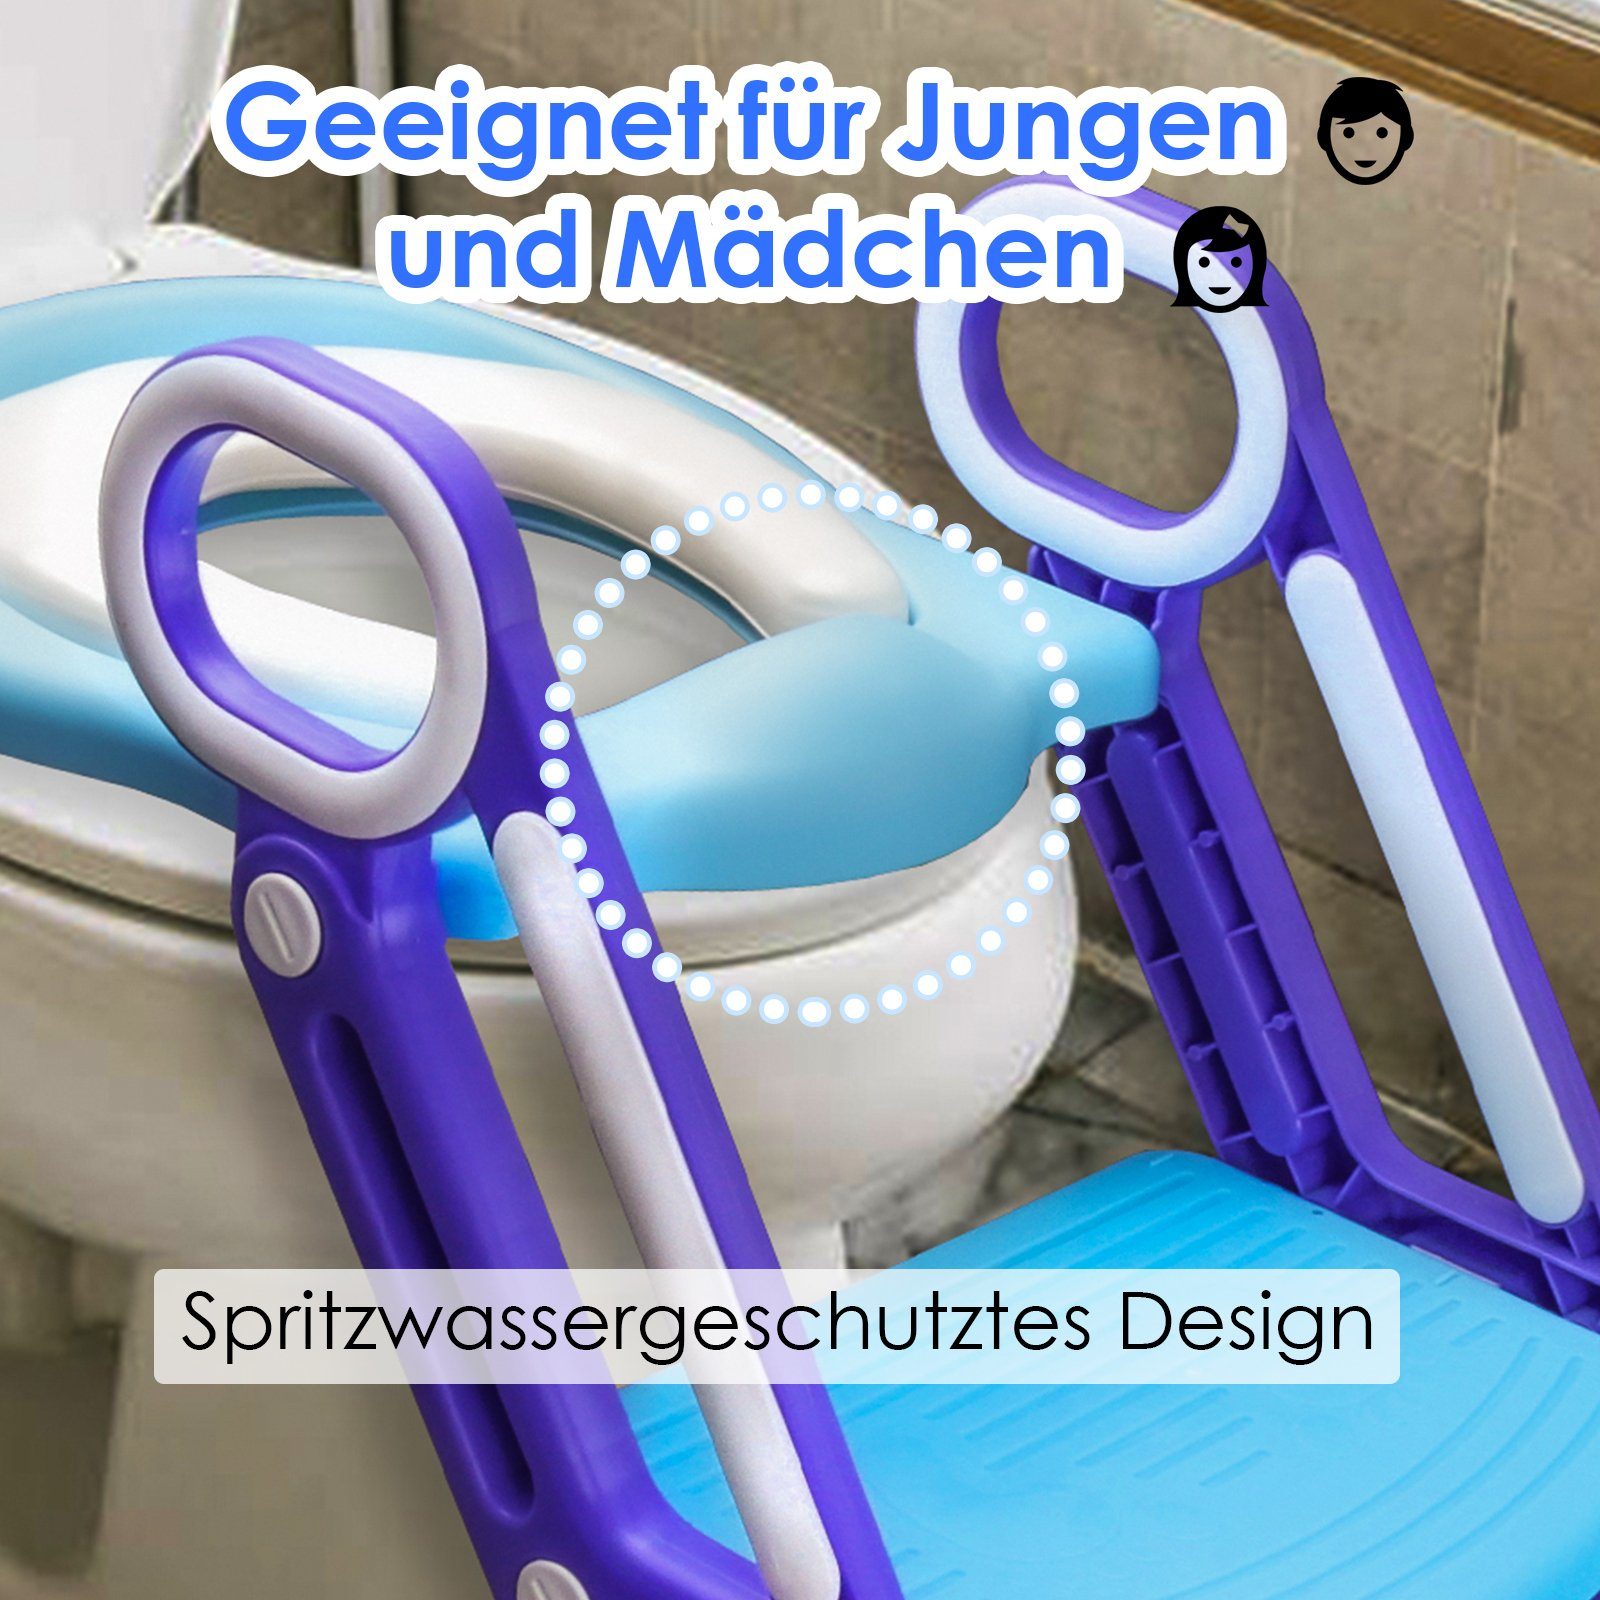 Treppe Kindertoilette Toilettentrainer Toilettentrainer Töpfchentrainer Sitz Lospitch WC mit